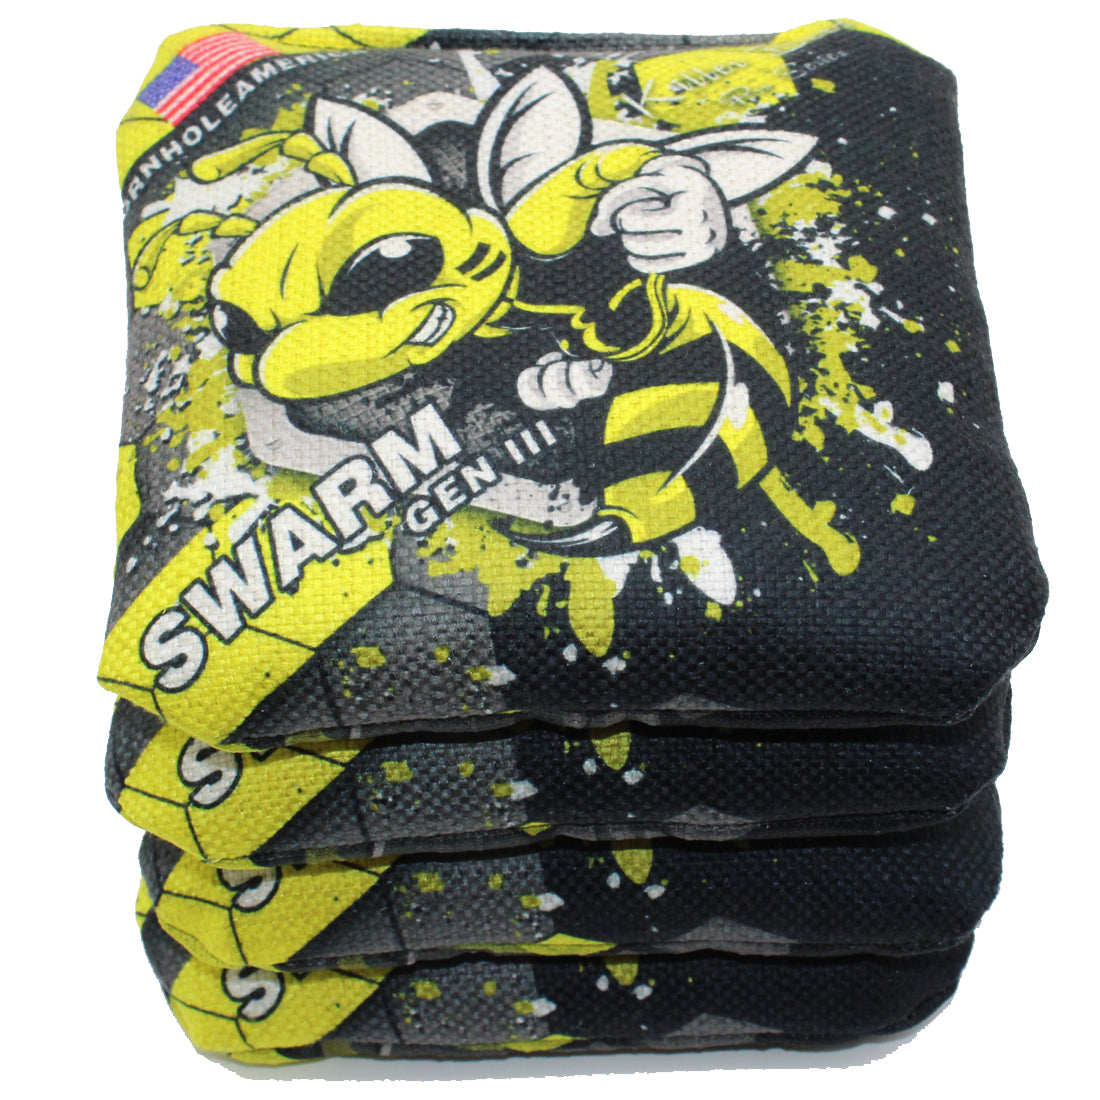 Killer Bees Pro Series Cornhole Bags